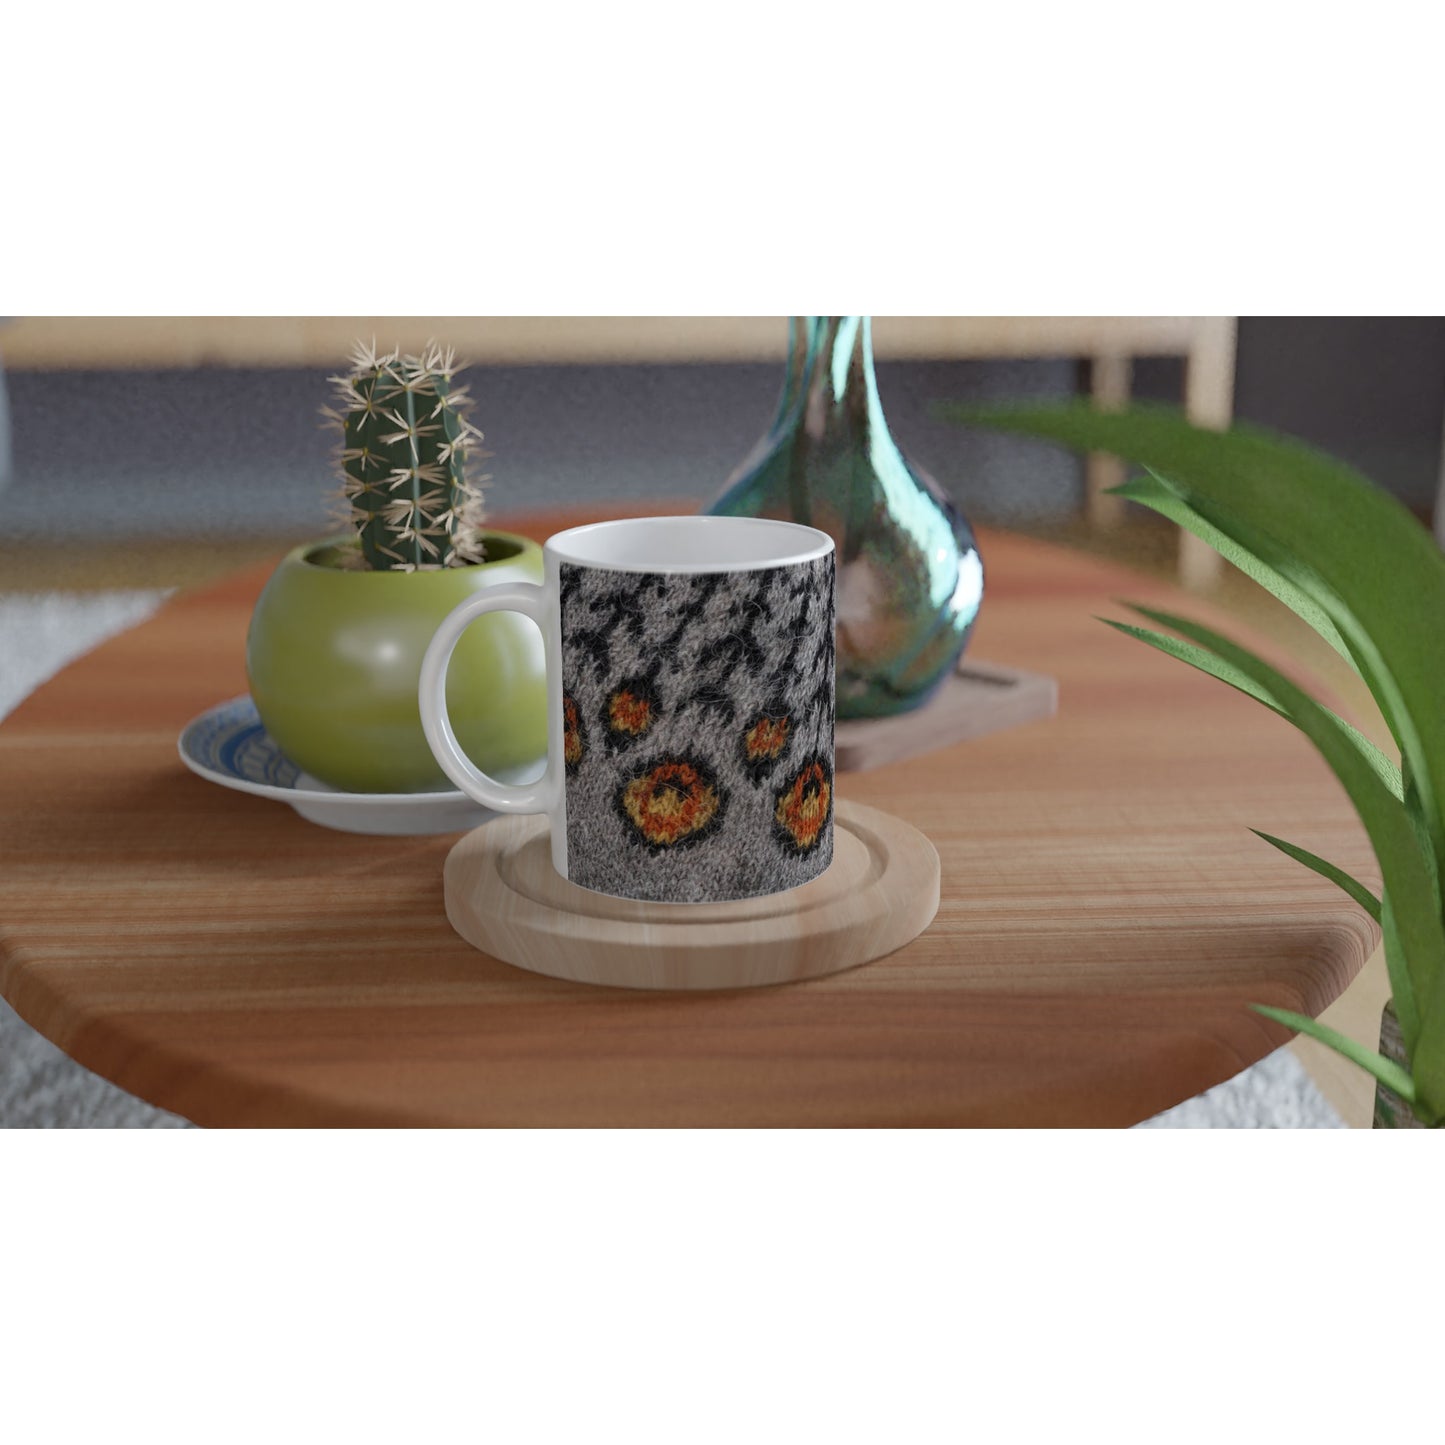 Mug with Icelandic knit pattern - Peacock (grey)